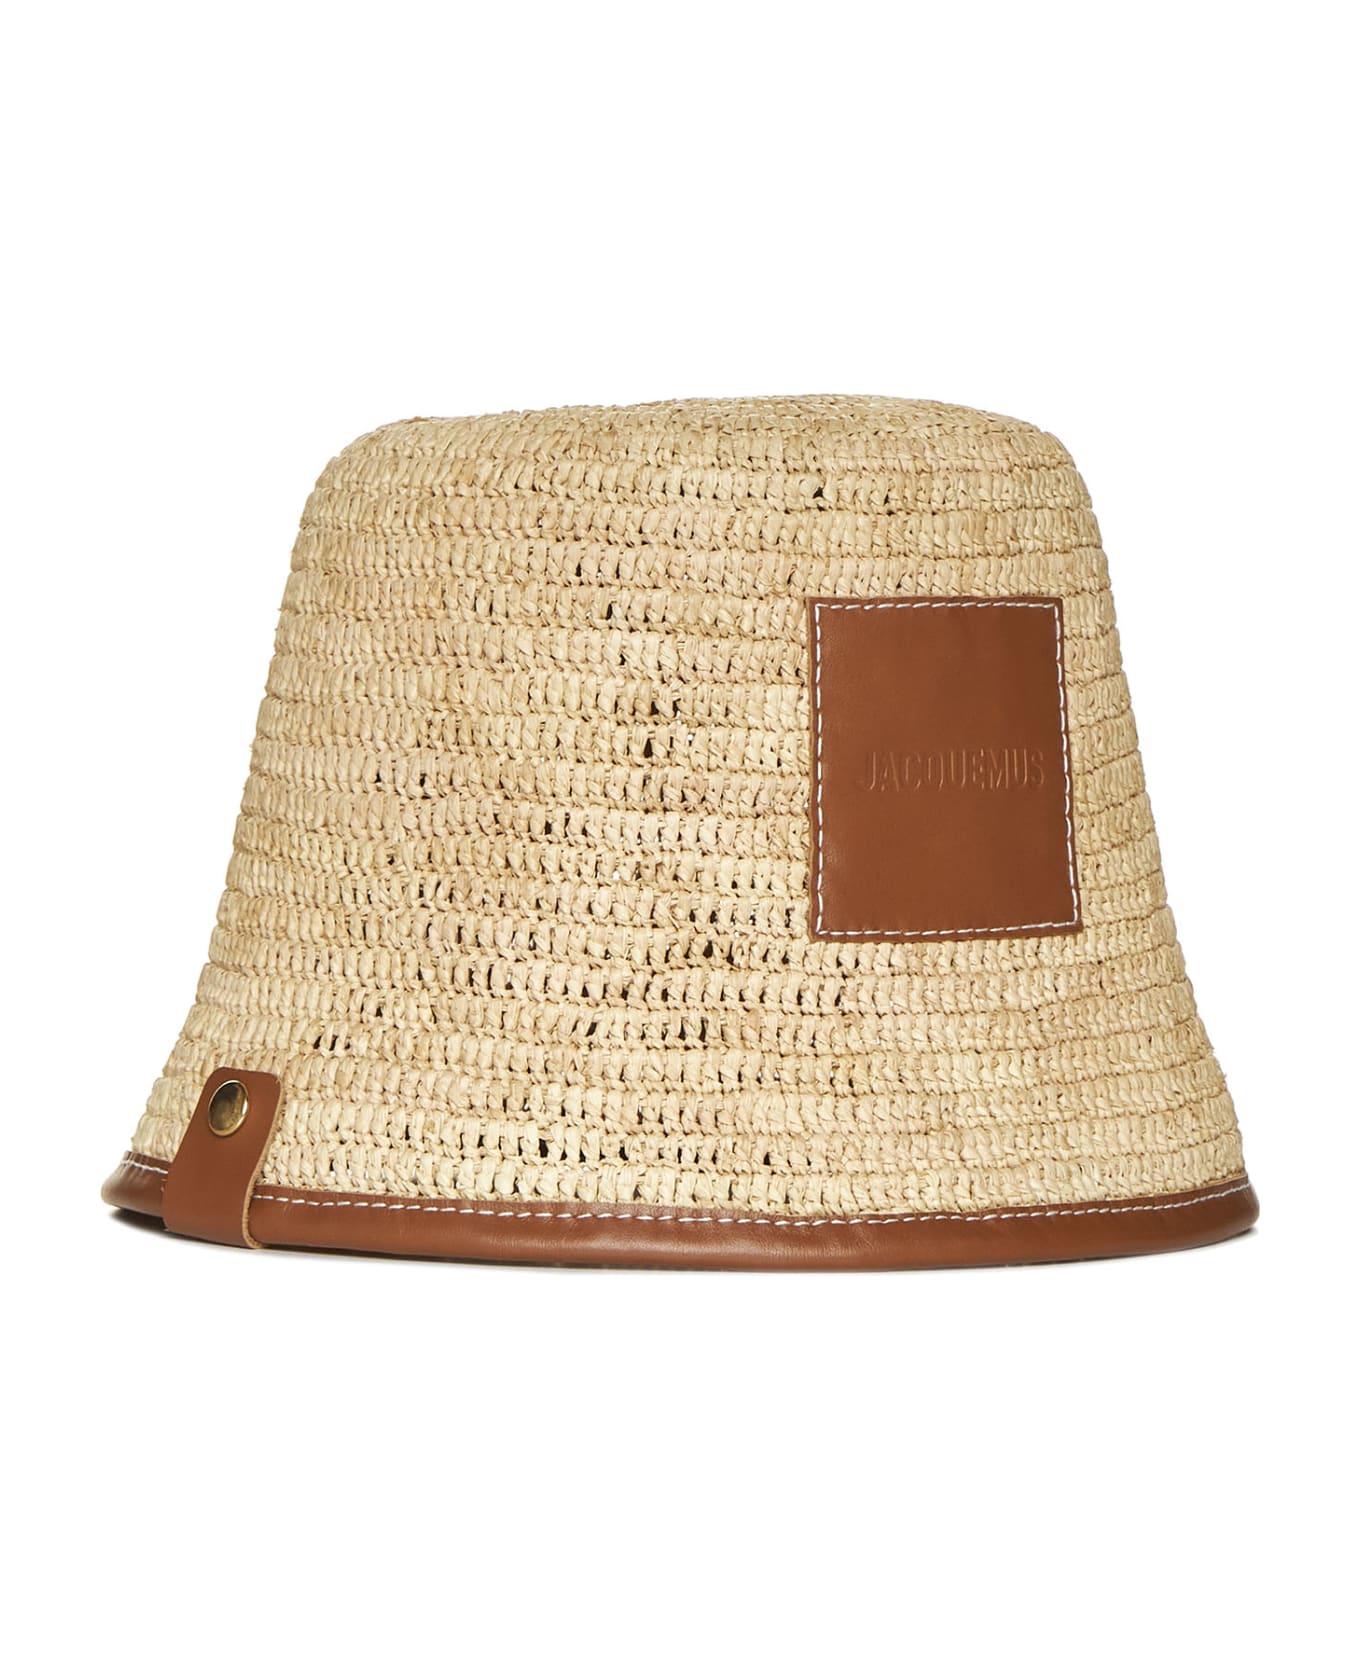 Jacquemus Hat - Light brown 2